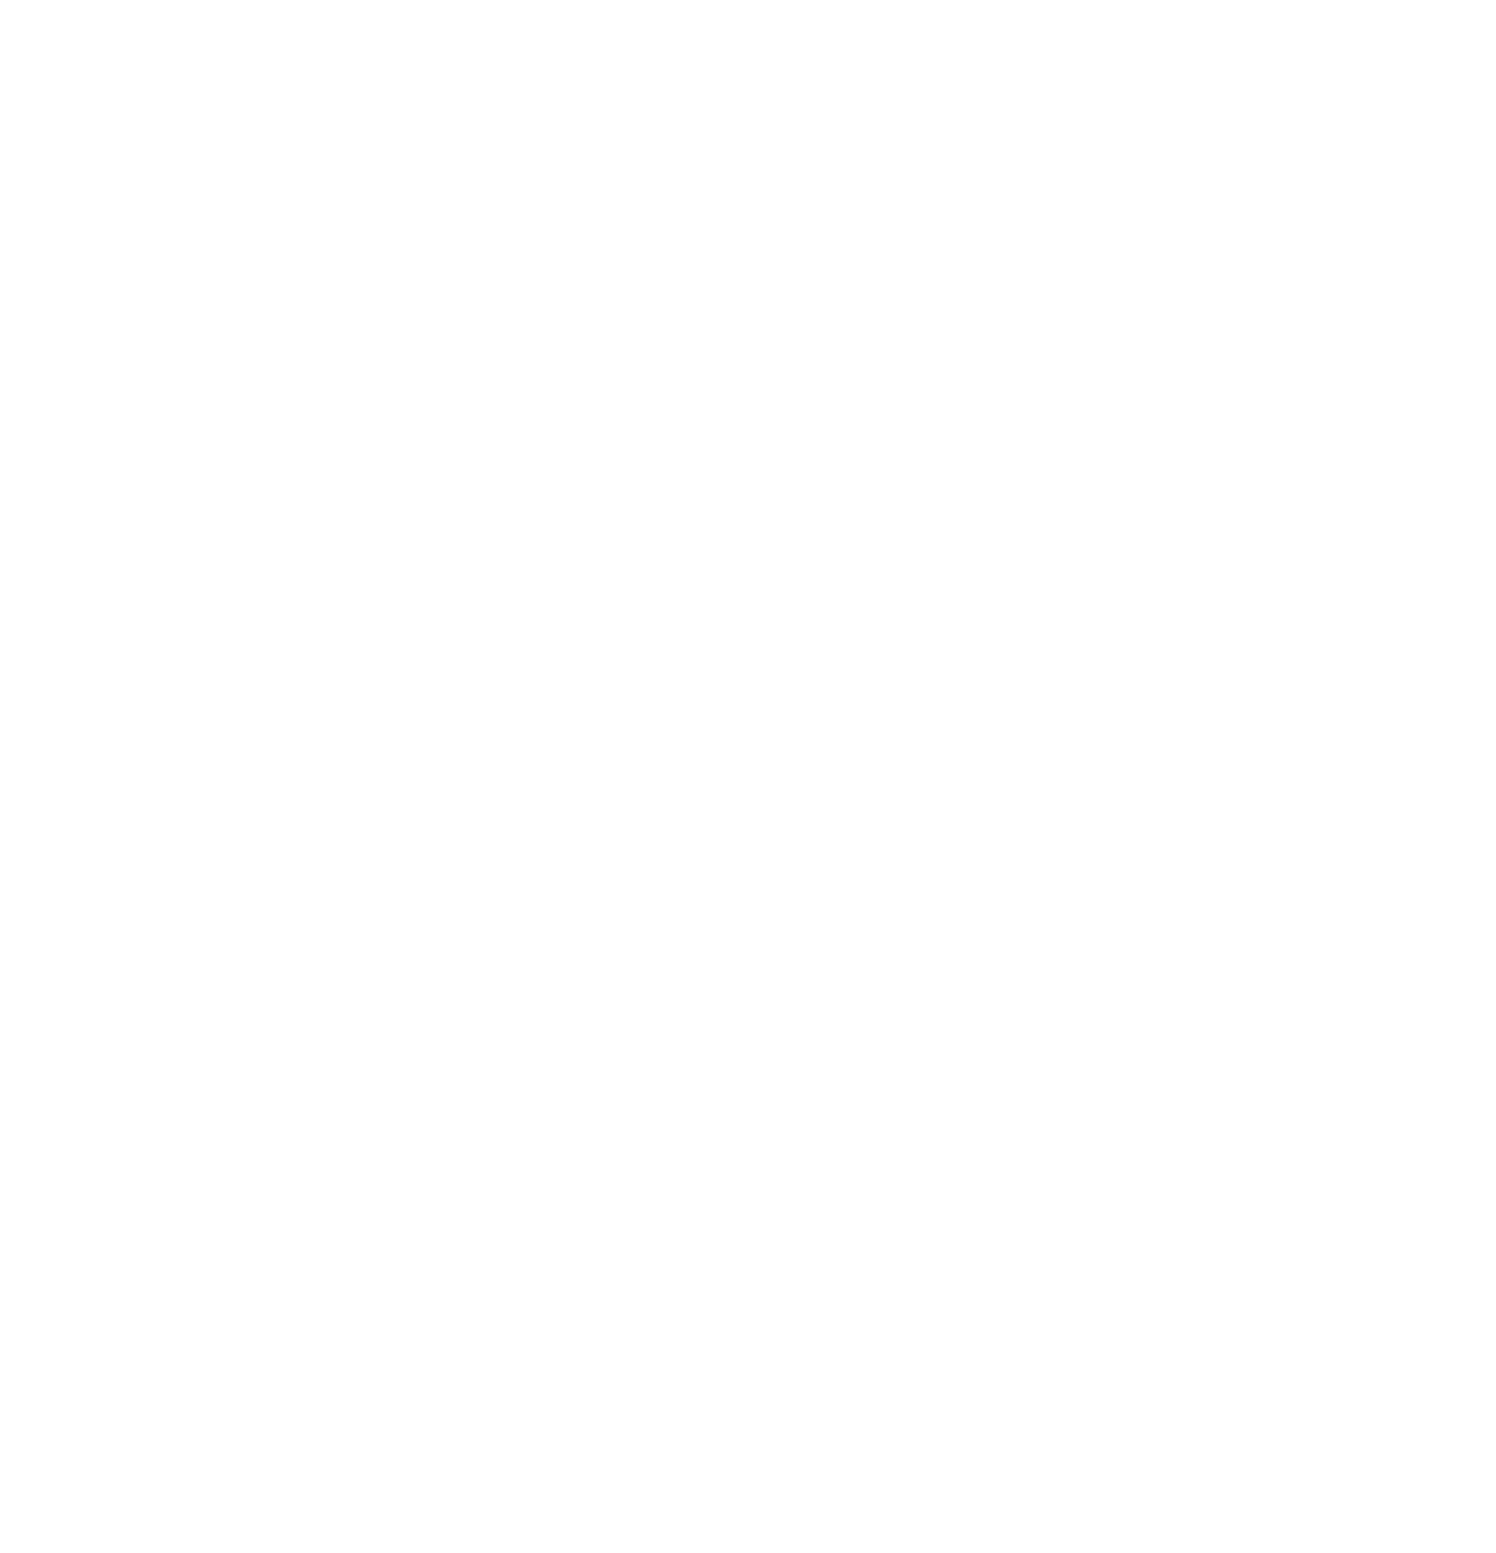 Asbury Automotive Group logo for dark backgrounds (transparent PNG)